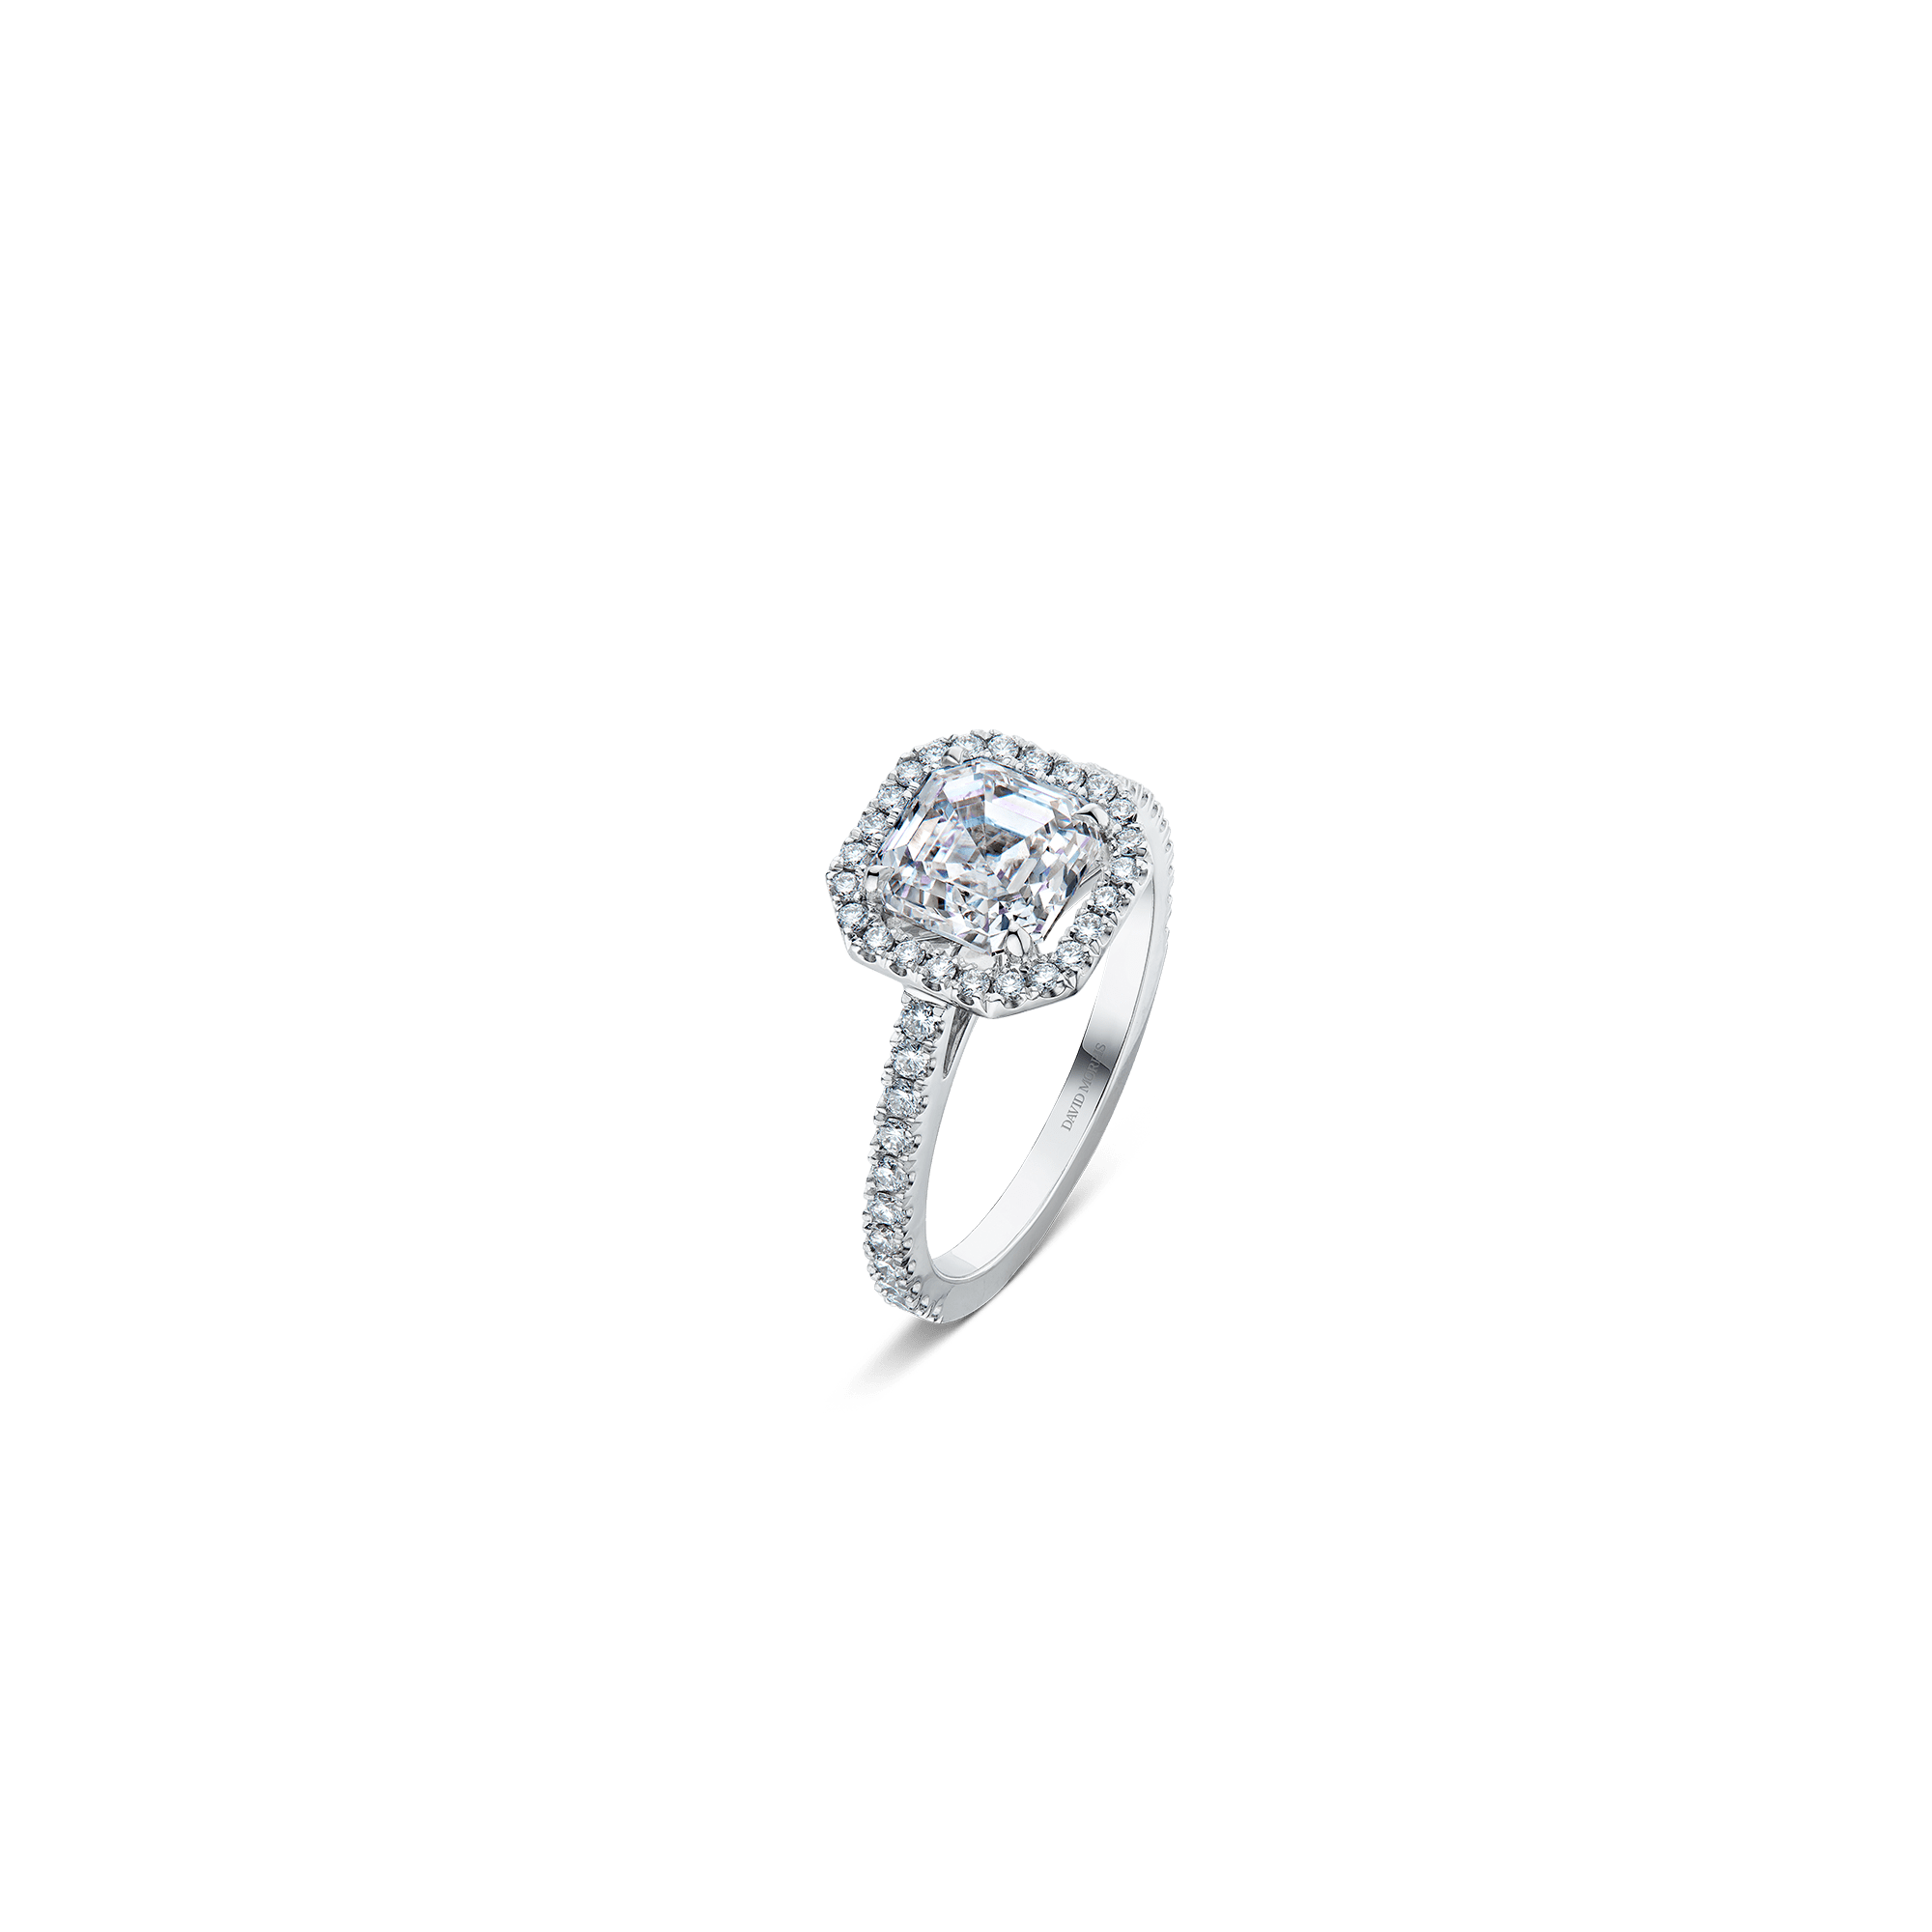 Square emerald cut with halo white diamond engagement ring - David Morris